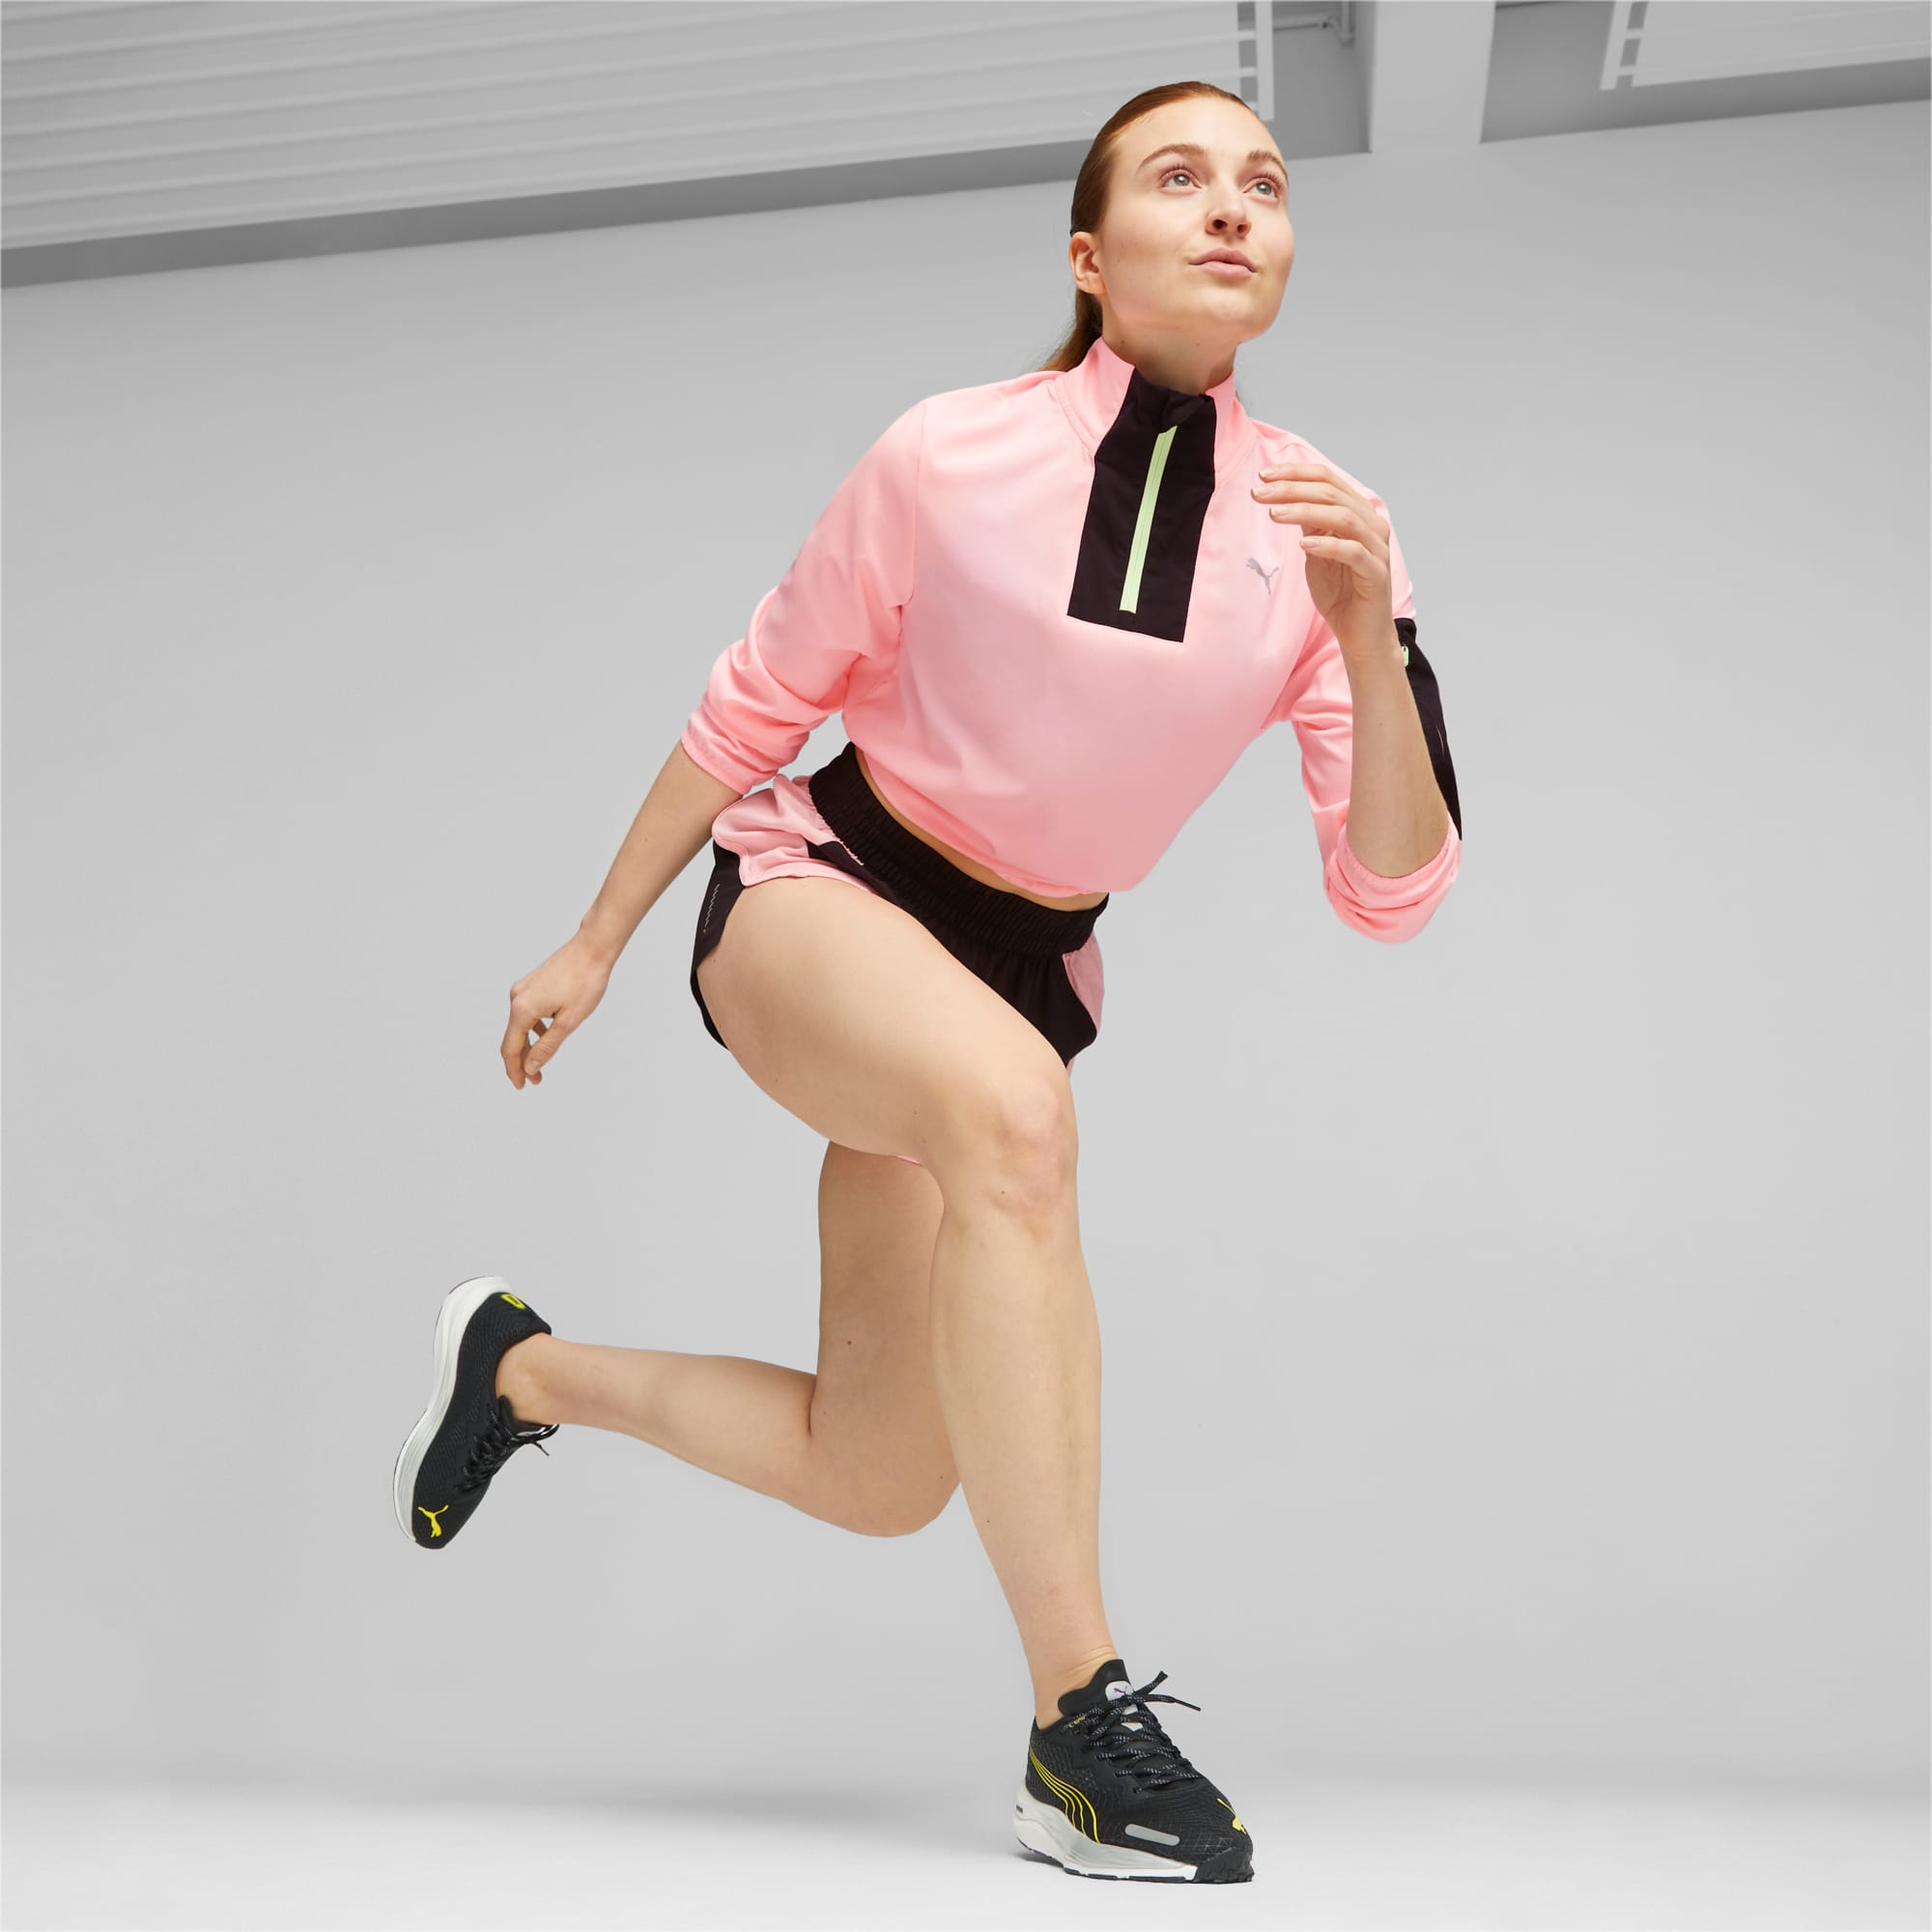 Buy Puma Velocity Nitro 2 Womens Pink Running Shoes Online